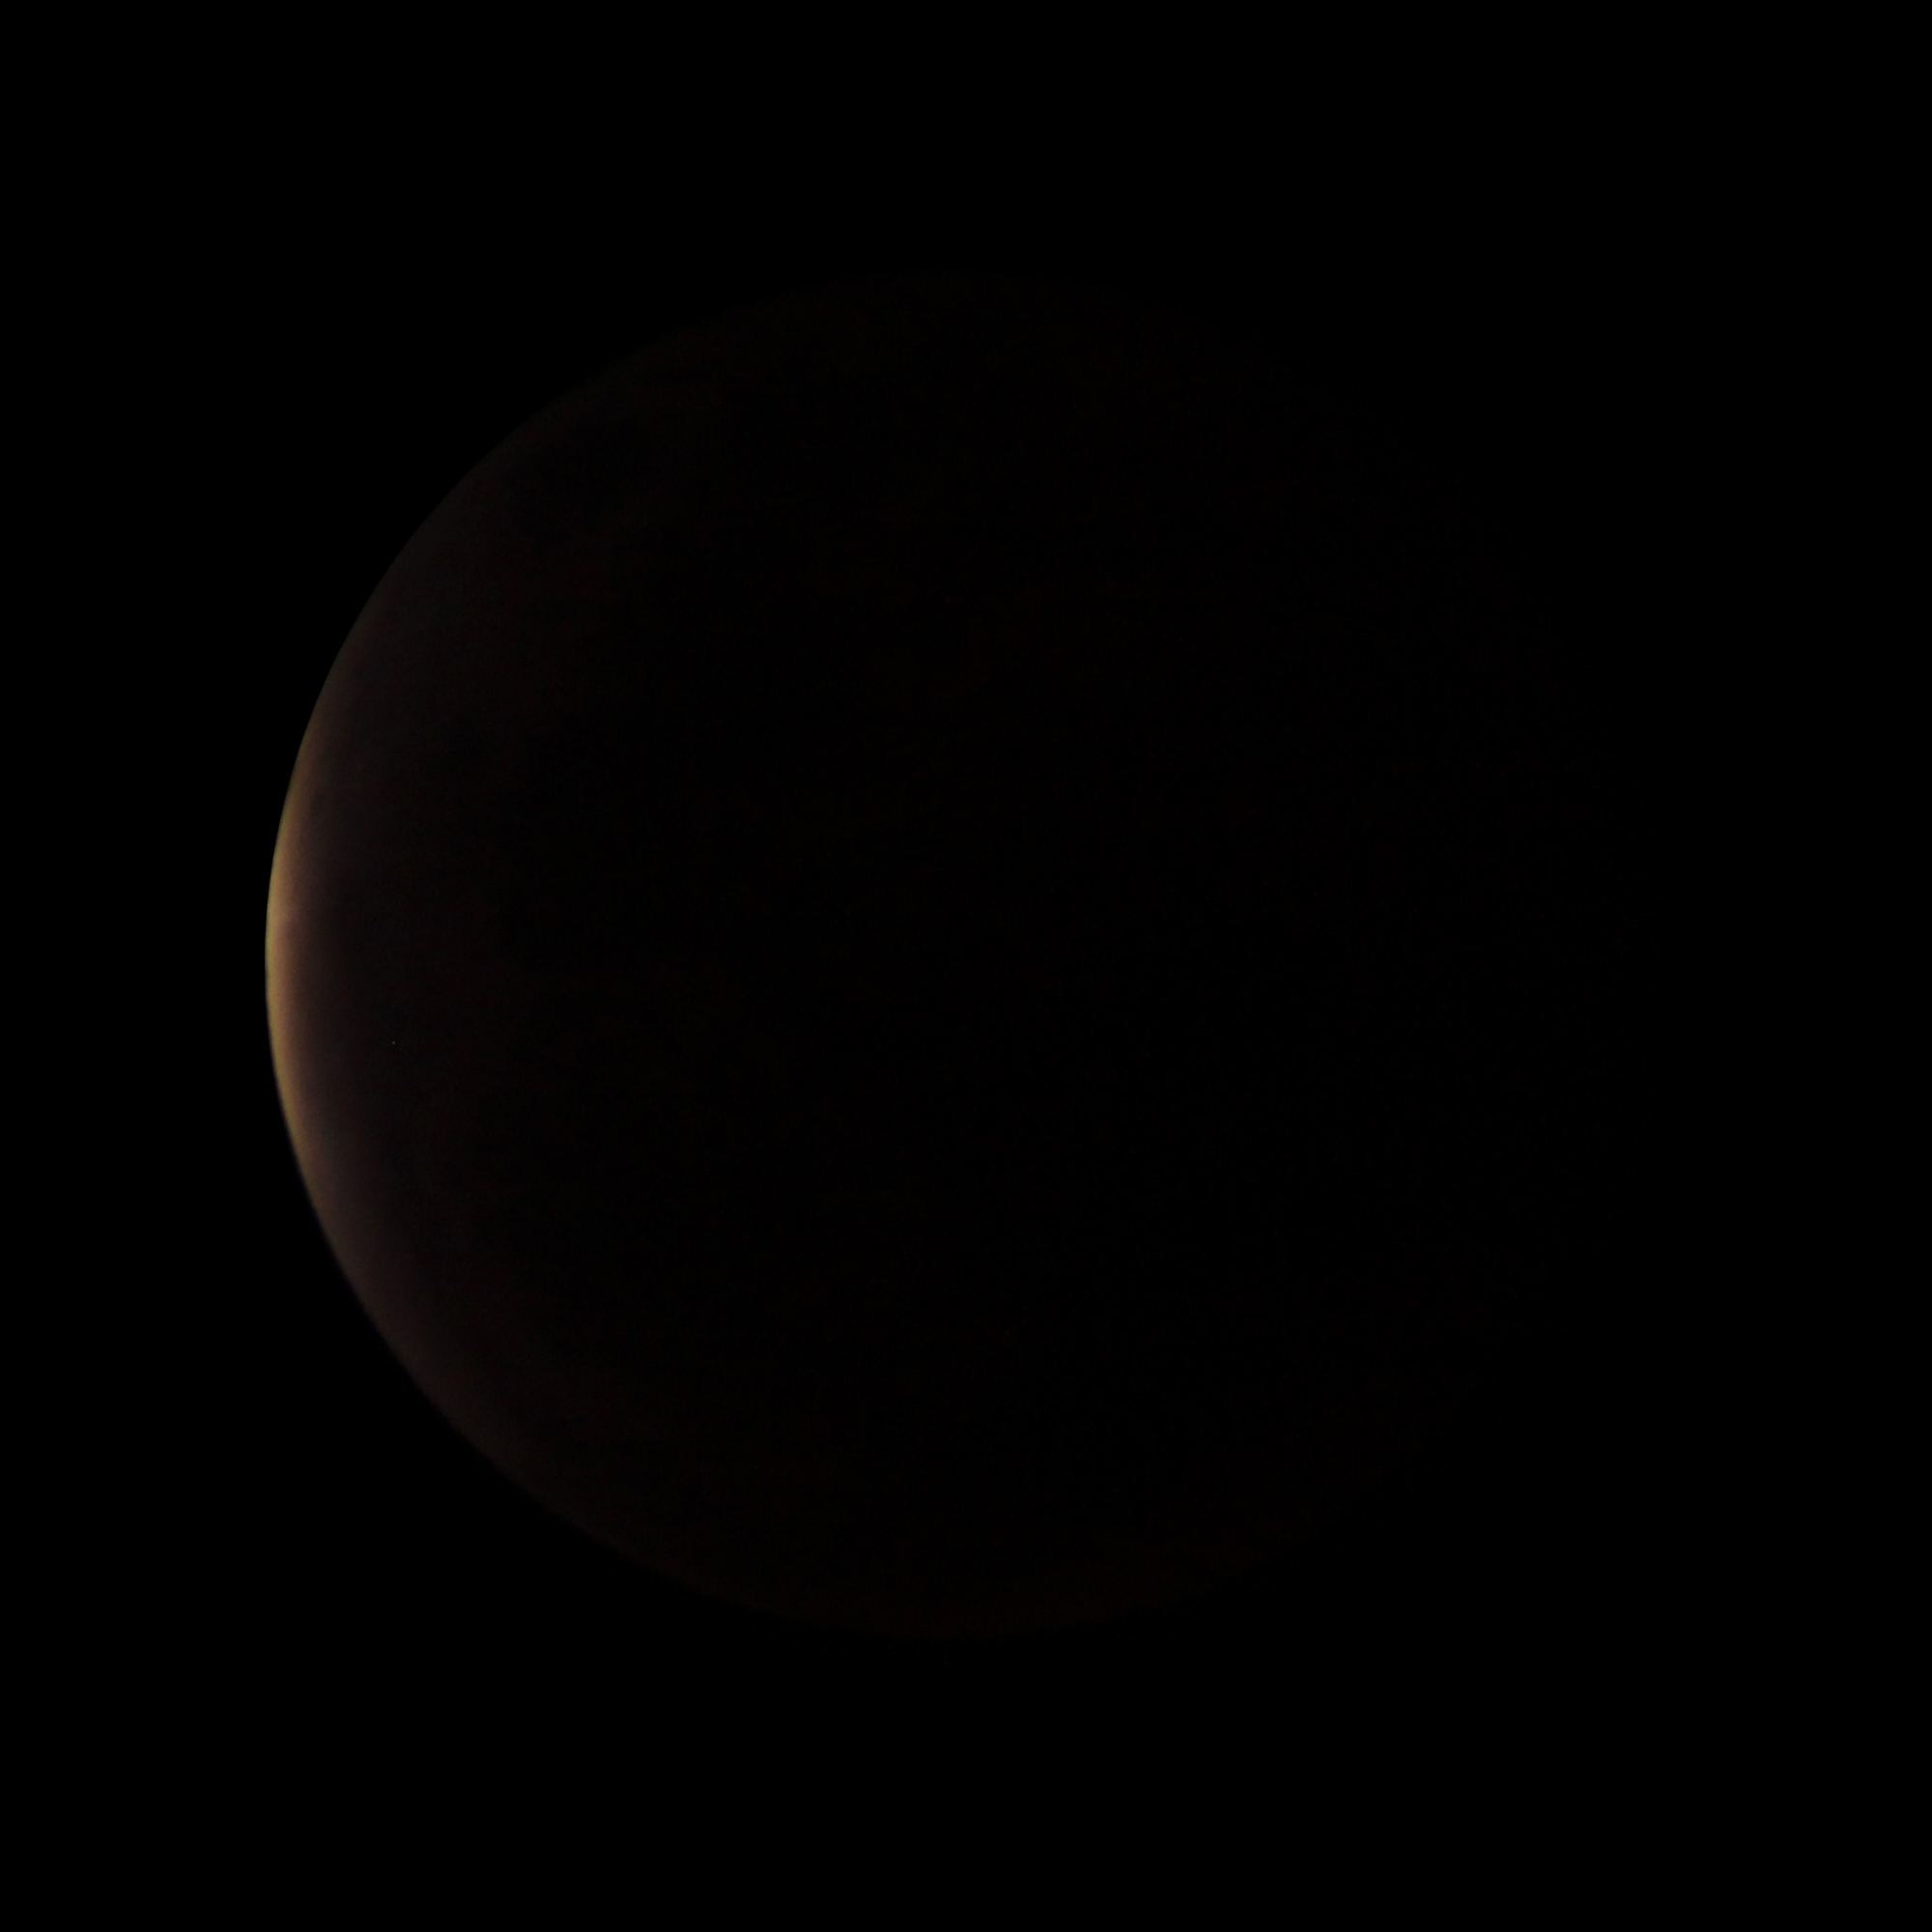 Moon Eclipse_2_2.jpg